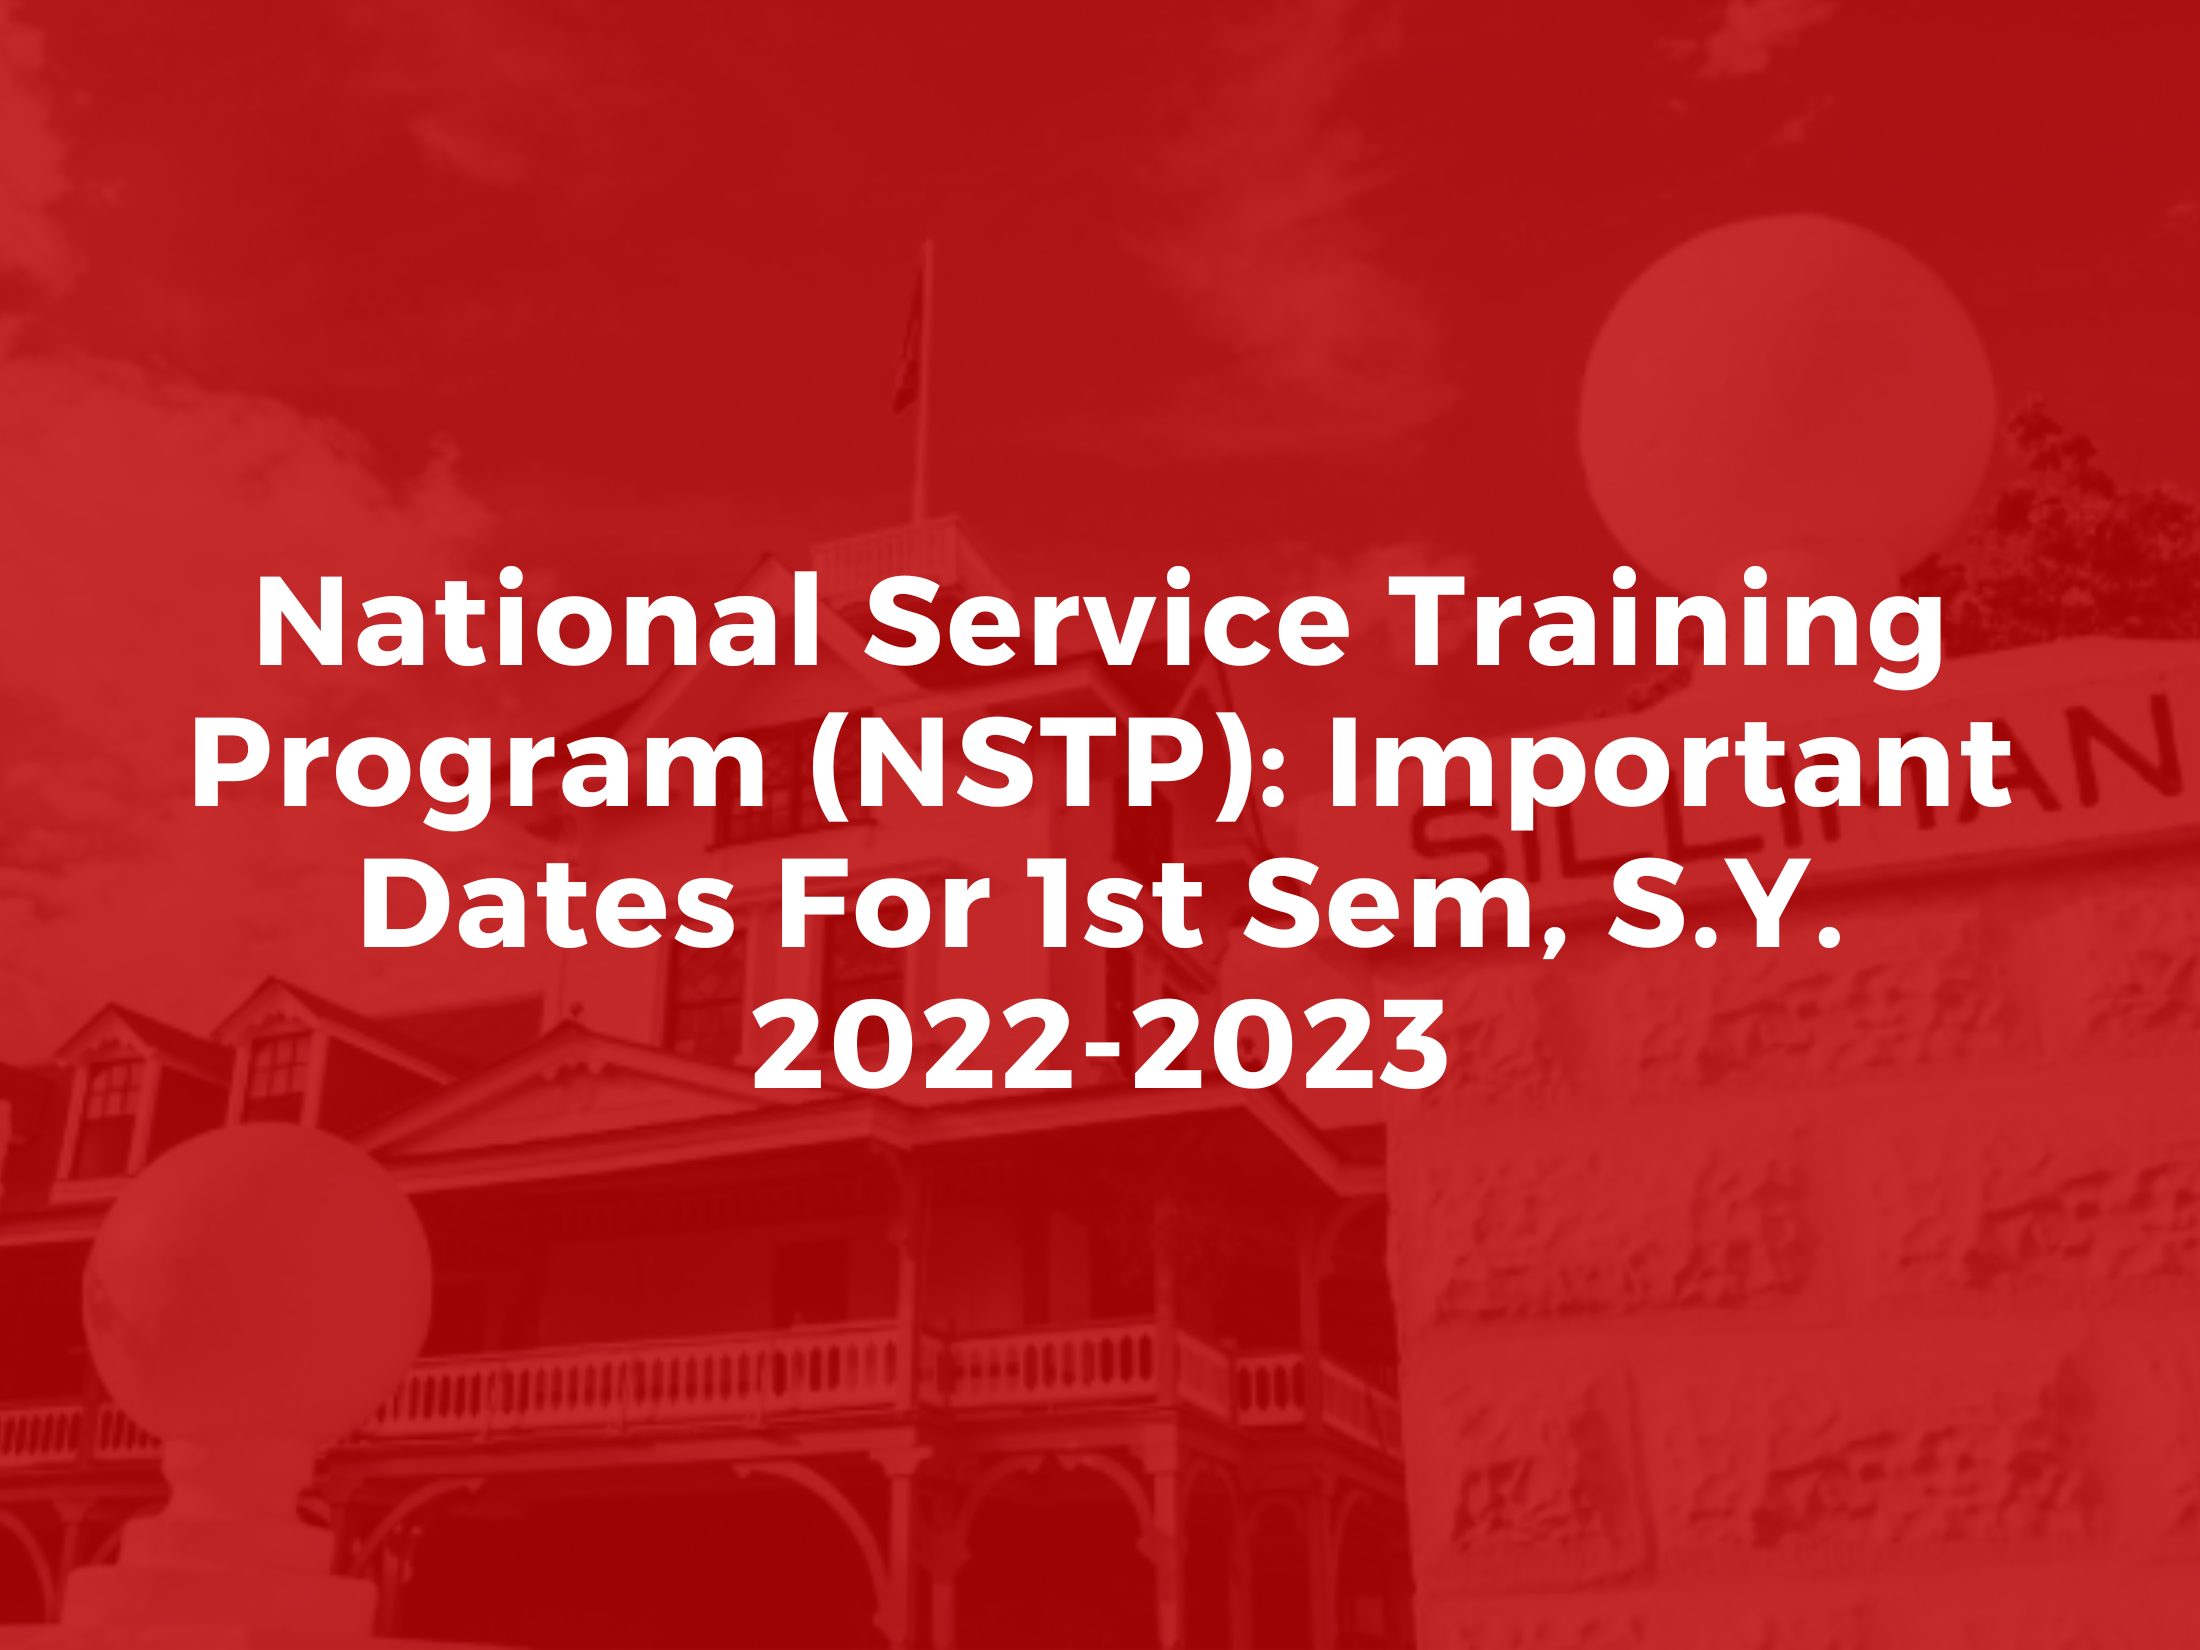 Announcement:  National Service Training Program (NSTP) Important Dates For 1st Sem, S.Y. 2022-2023